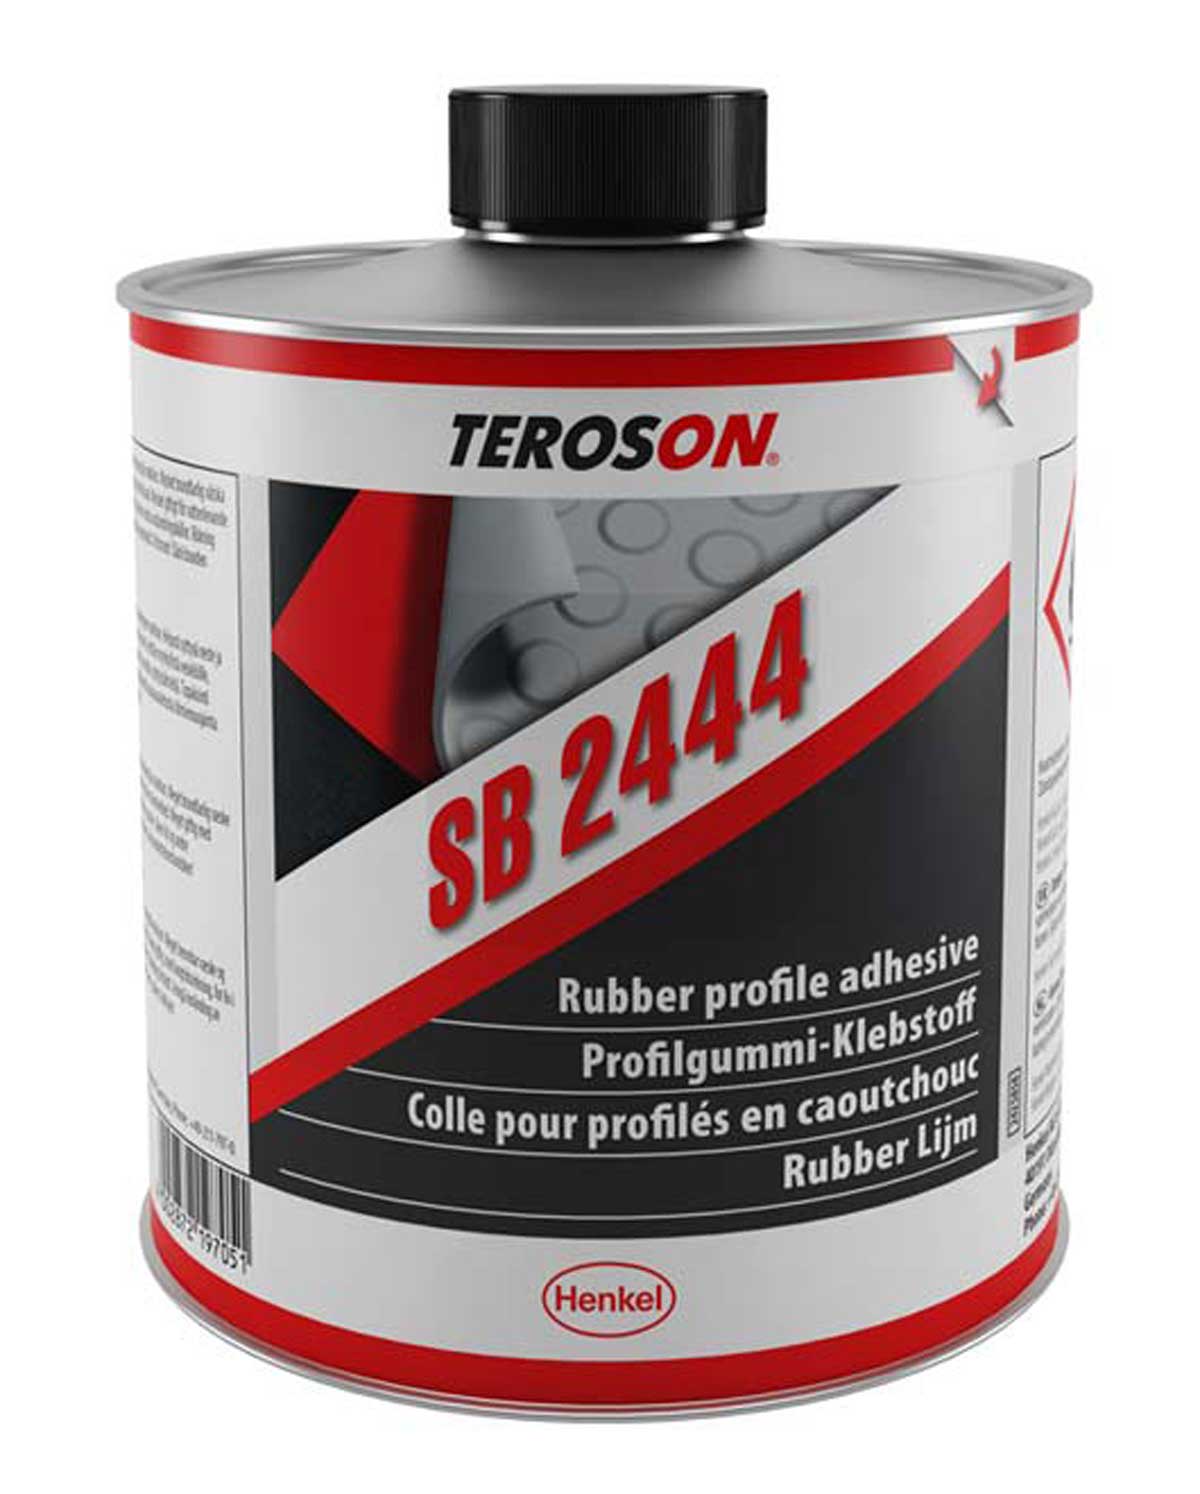 Henkel Teroson SB 2444 Profilgummikleber 340g